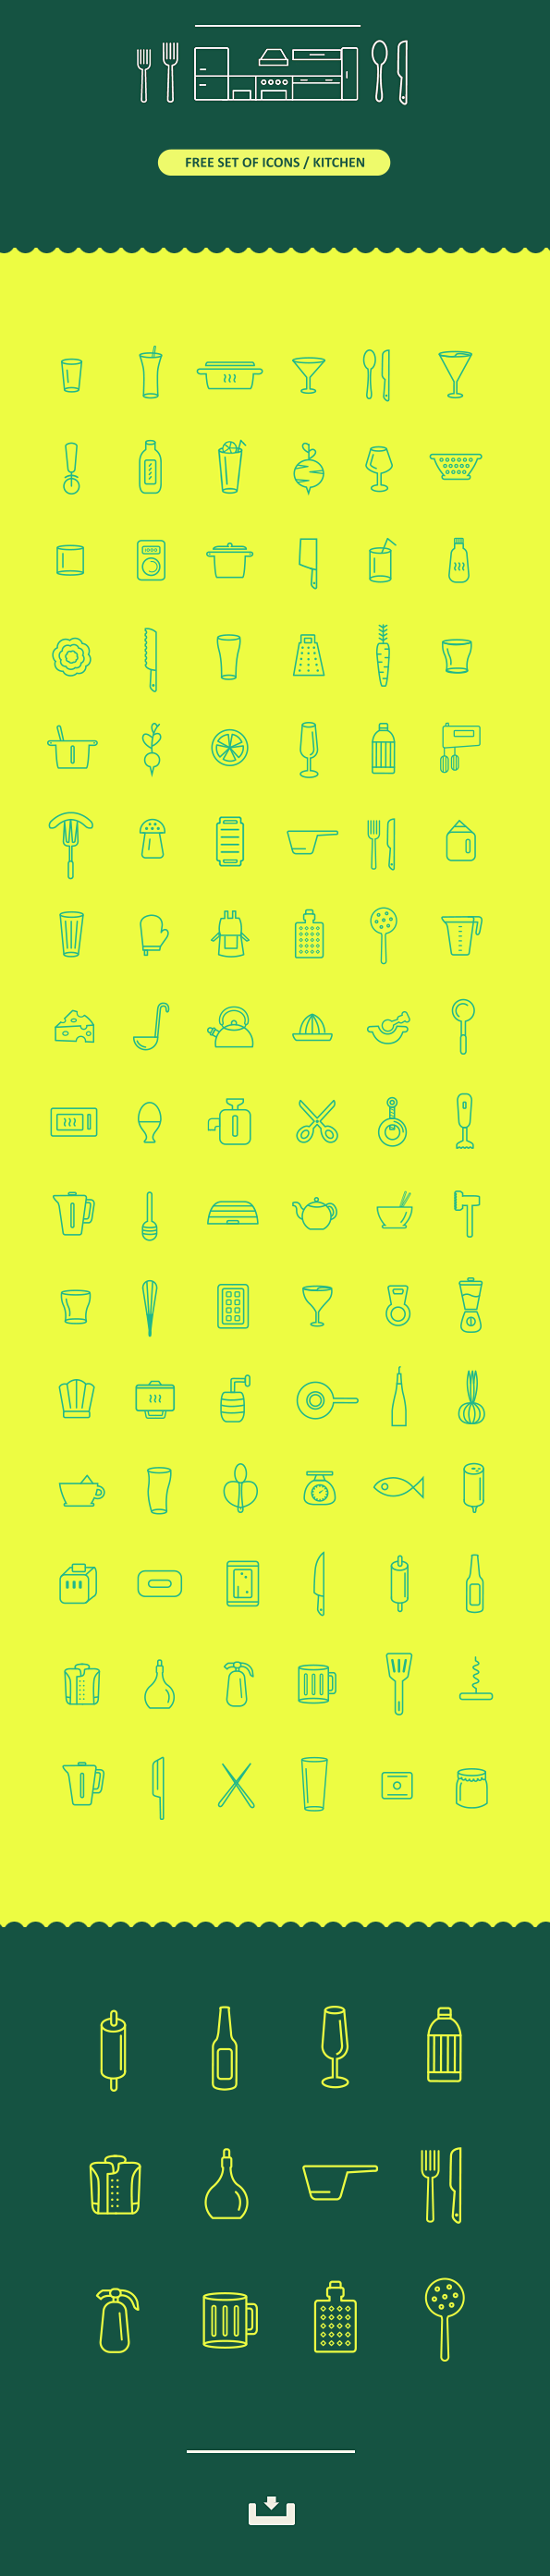 Free set of icons / Kitchen by Belc in 2015年1月的23个免费的扁平化图标合集下载